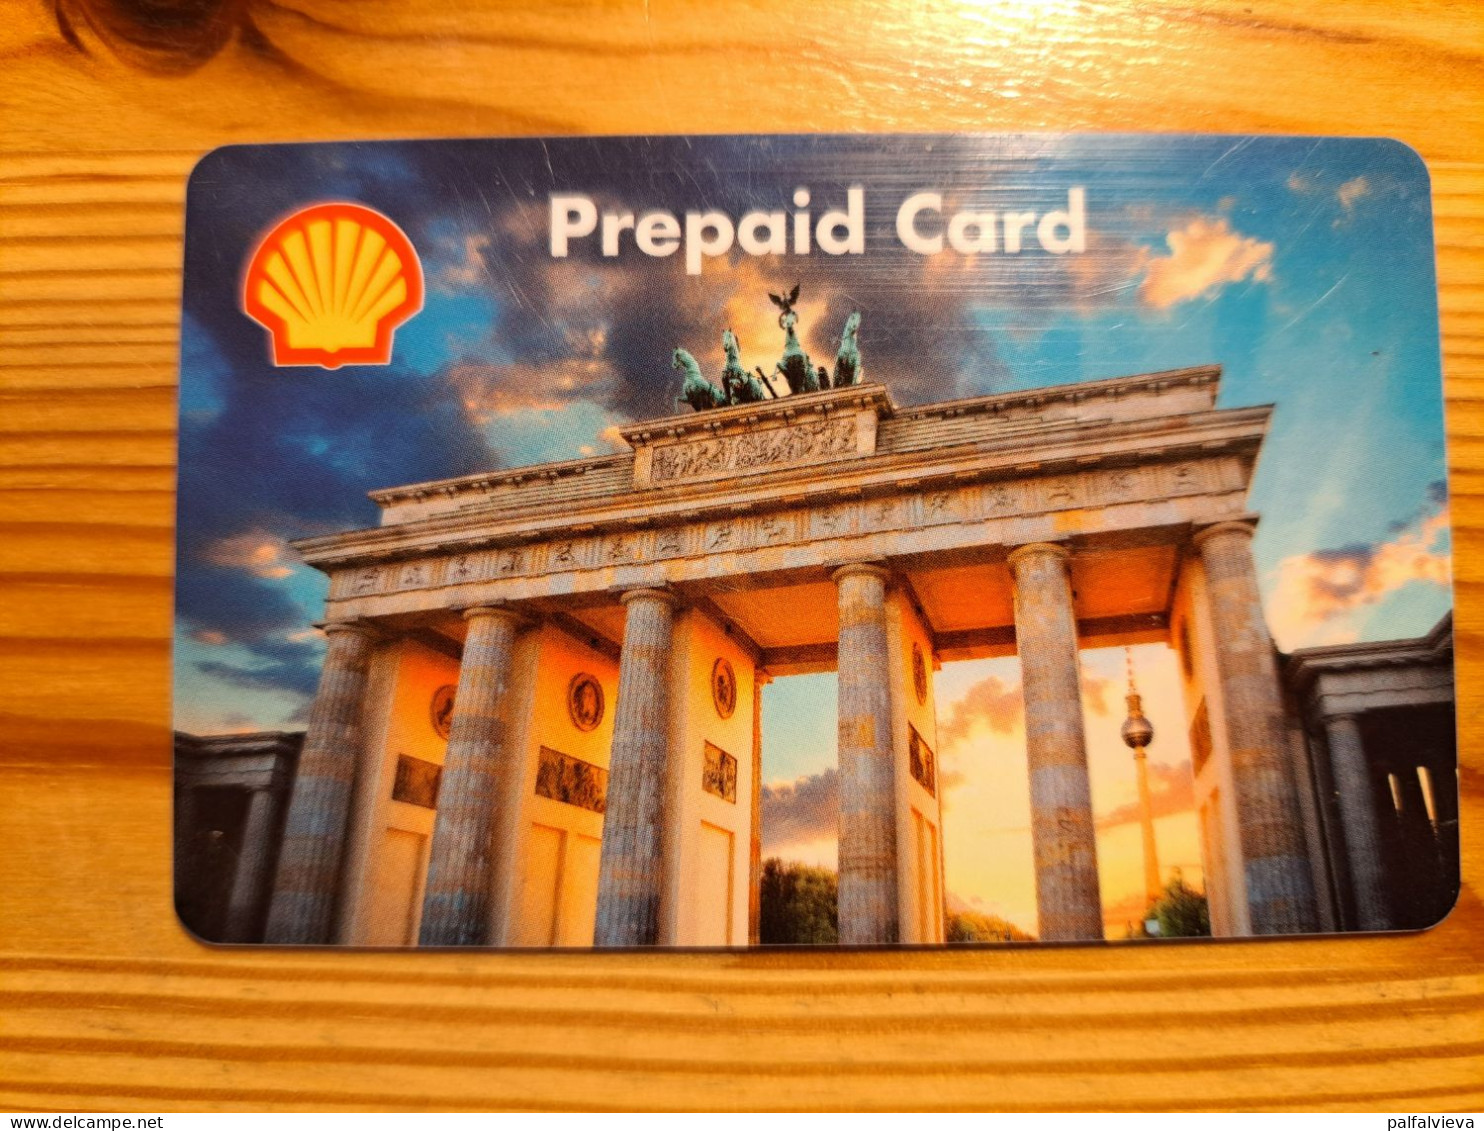 Shell Gift Card Germany - Berlin, Brandenburger Tor - Cartes Cadeaux